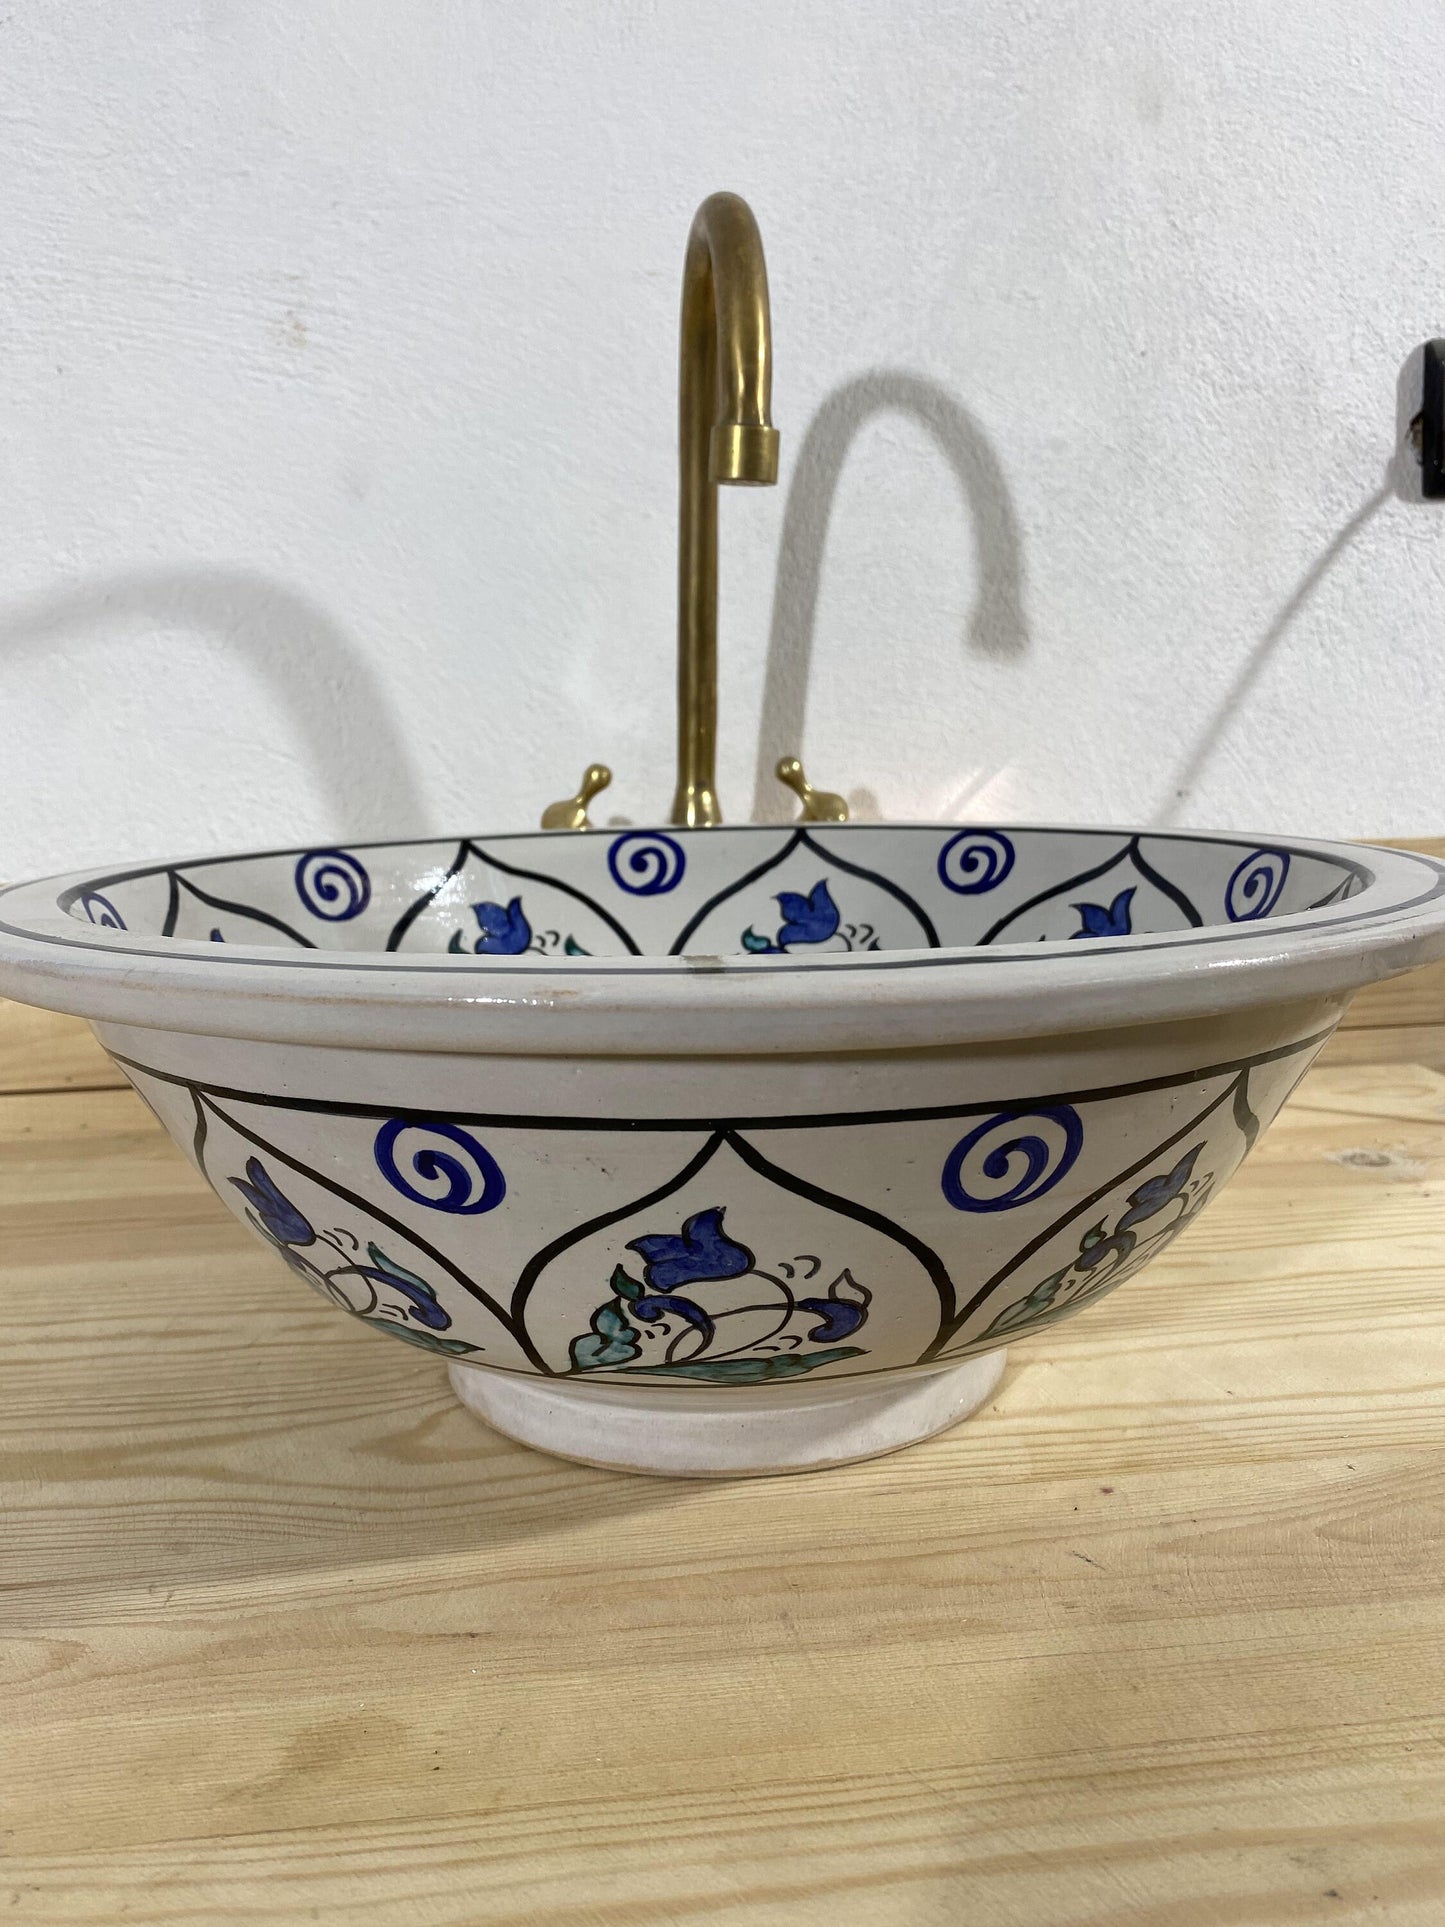 16" Bathroom vessel Sink Drop In or Undermount, Handpainted Ceramic wash basin Antique Bathroom Decor mid century modern styling